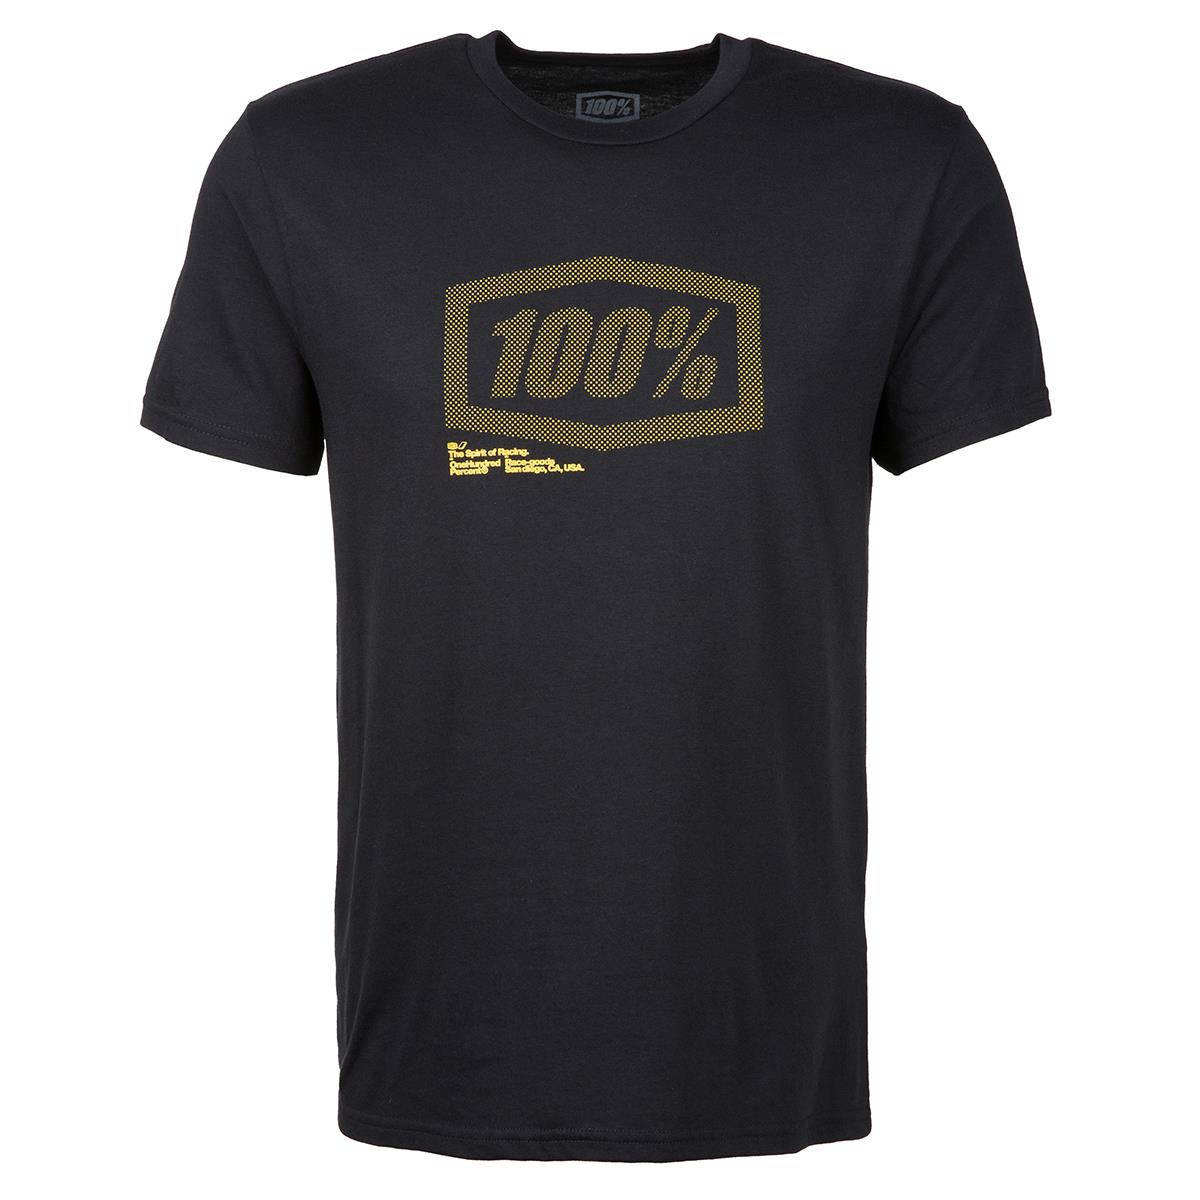 100% T-Shirt Occult Black